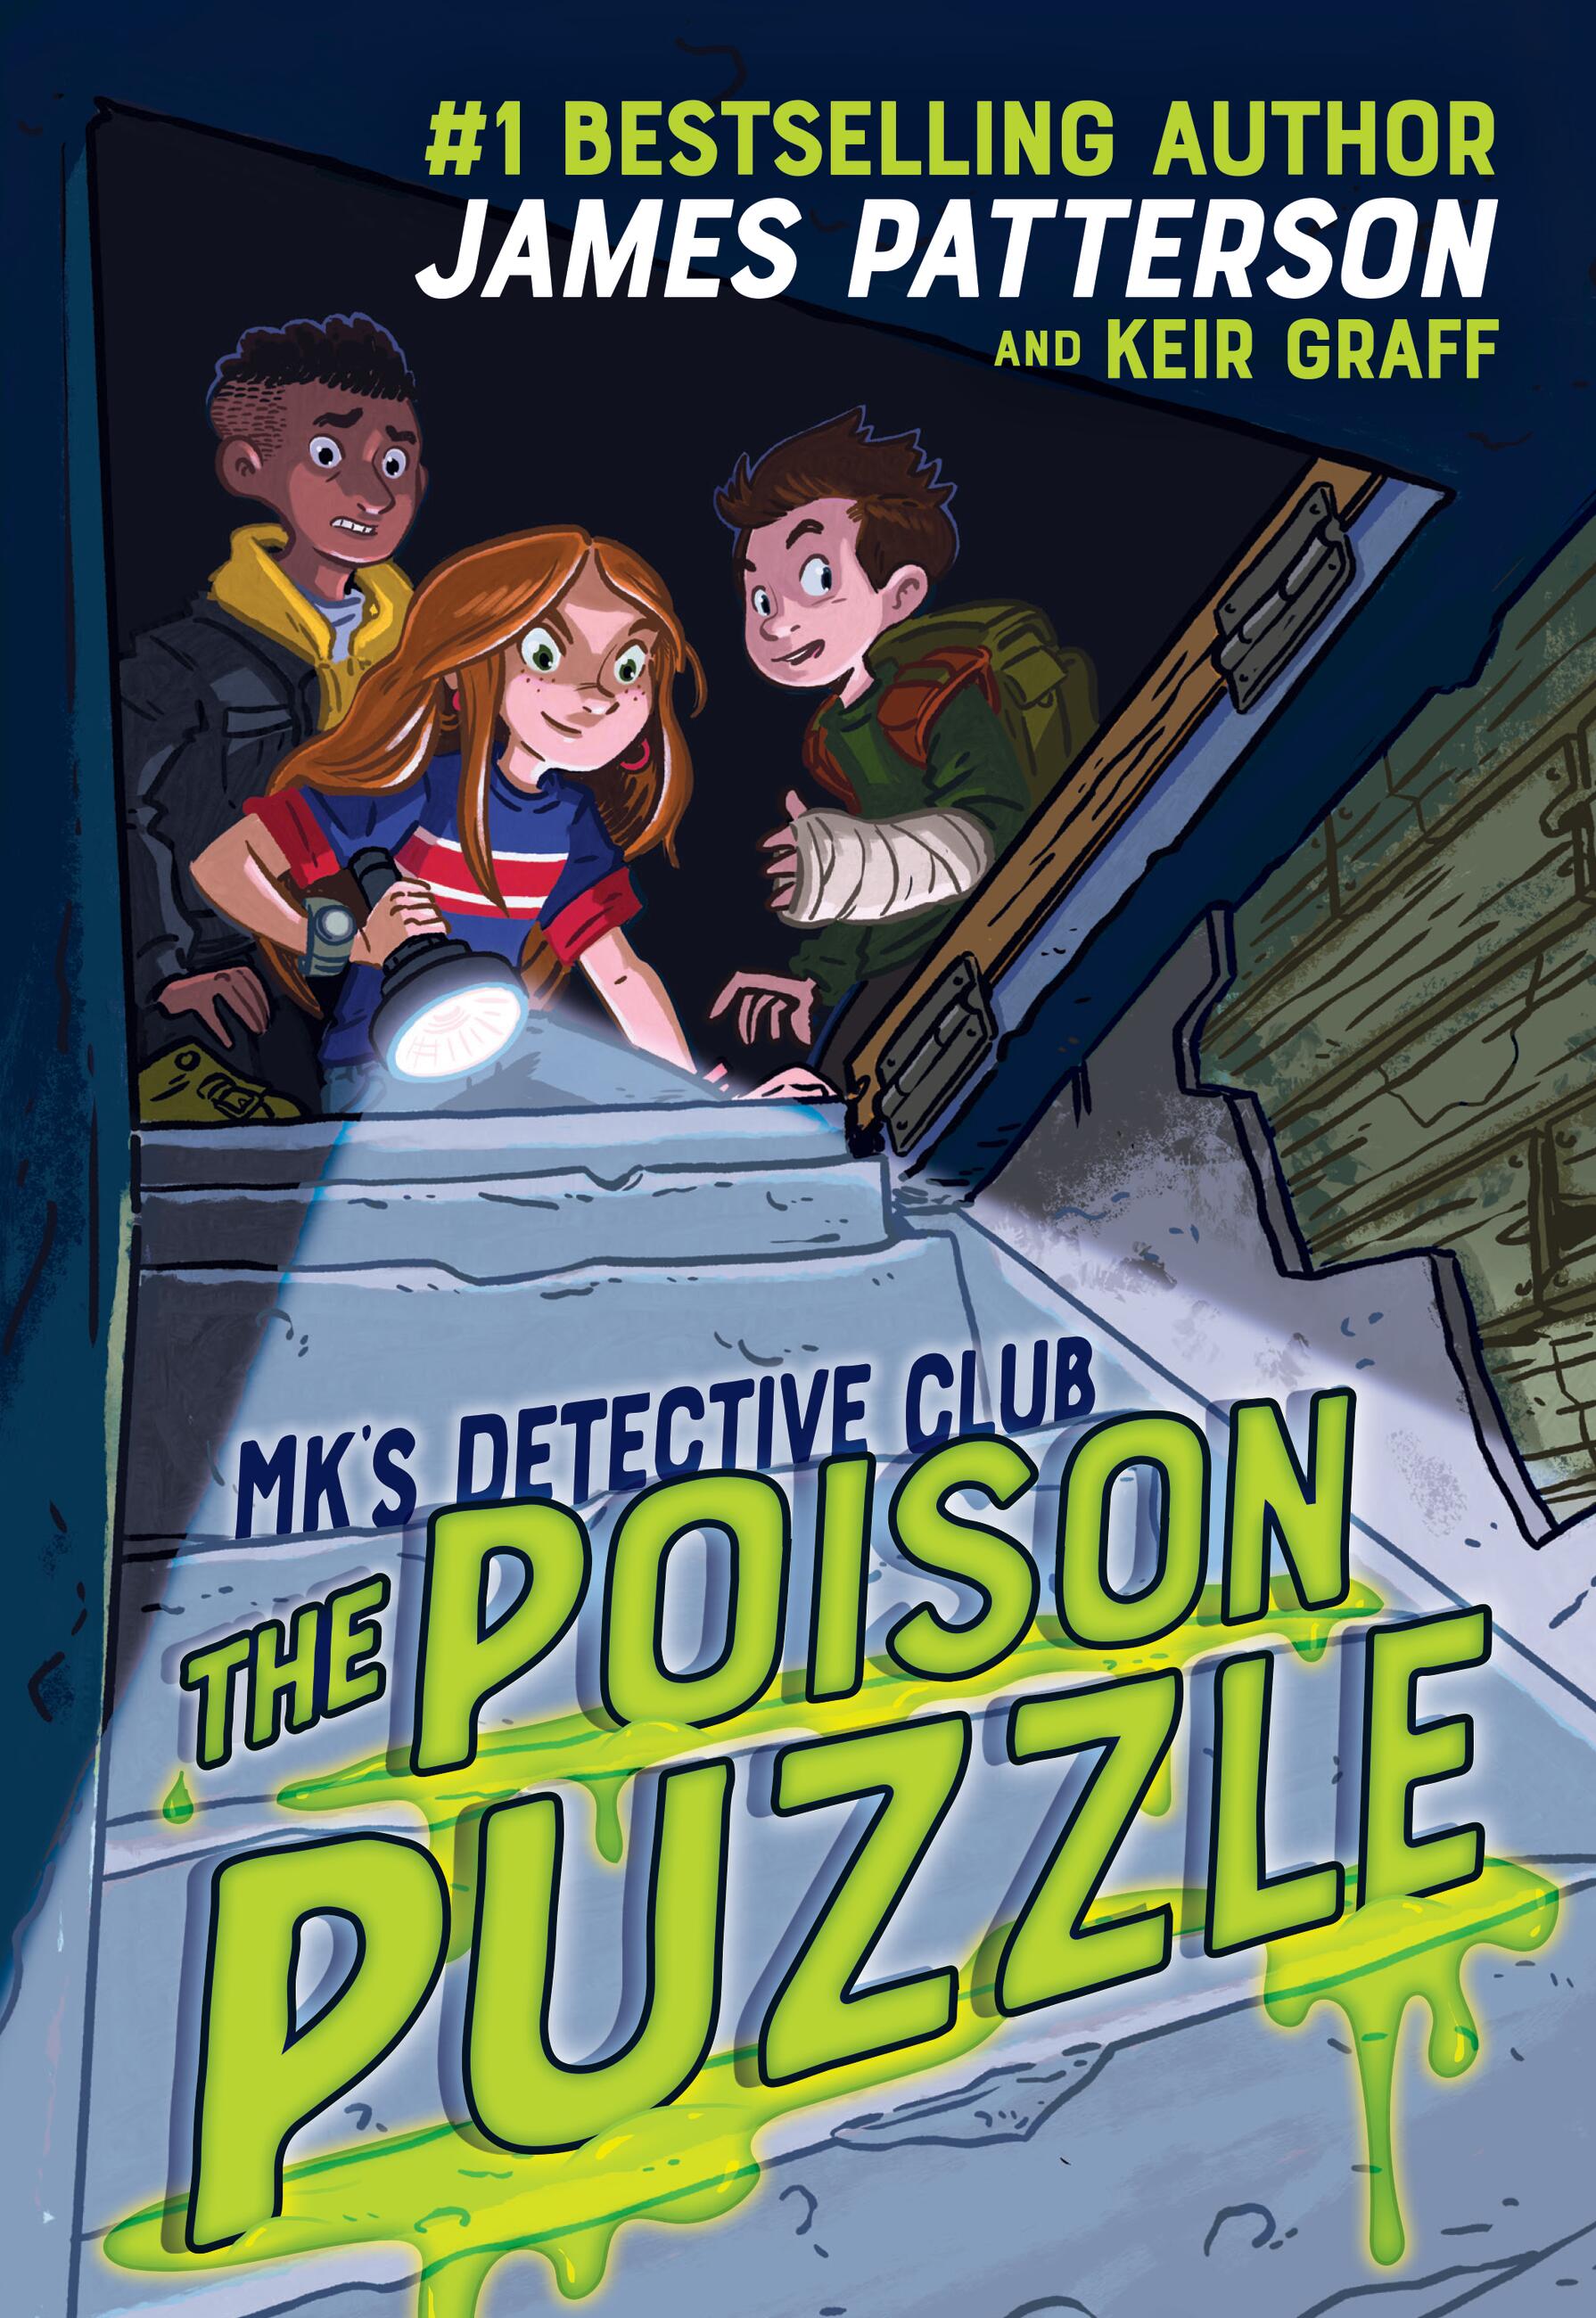 MK's Detective Club: The Poison Puzzle by James Patterson